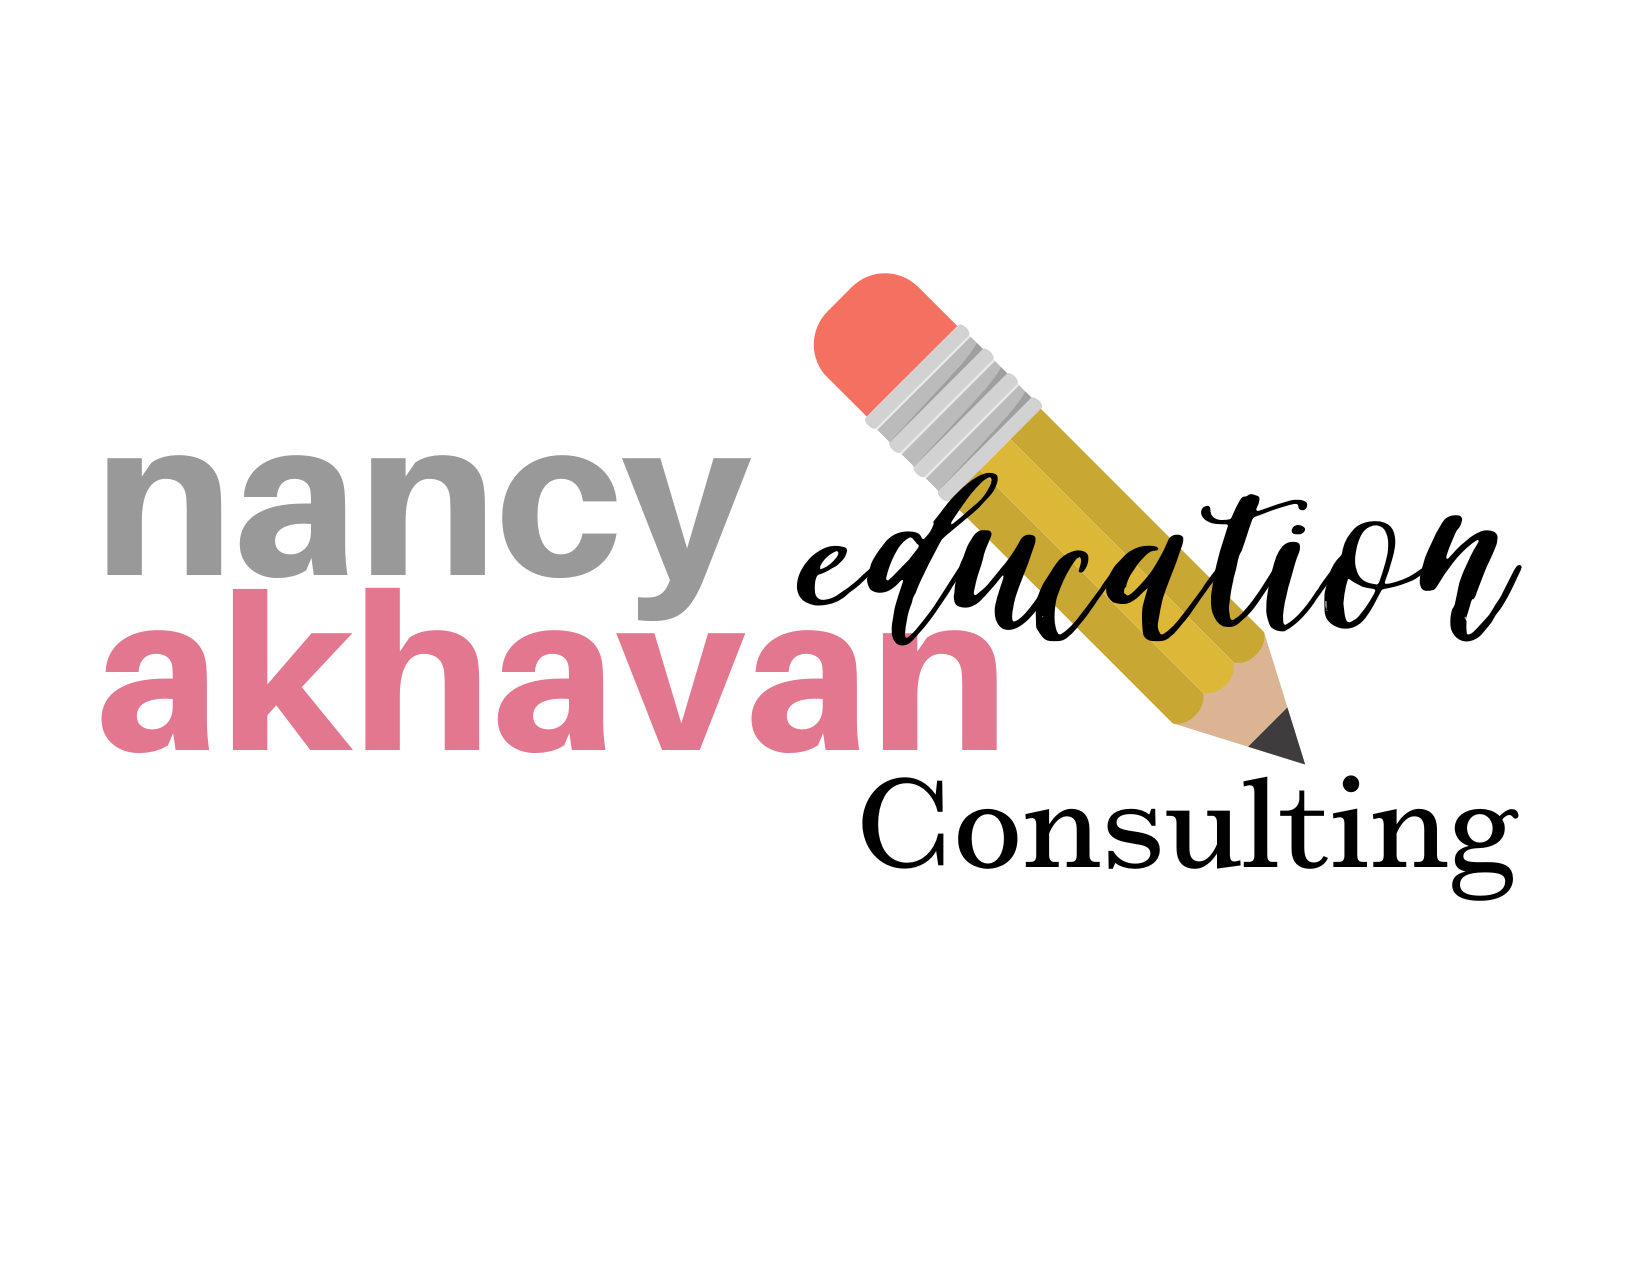 Nancy Akhavan Education Consulting logo